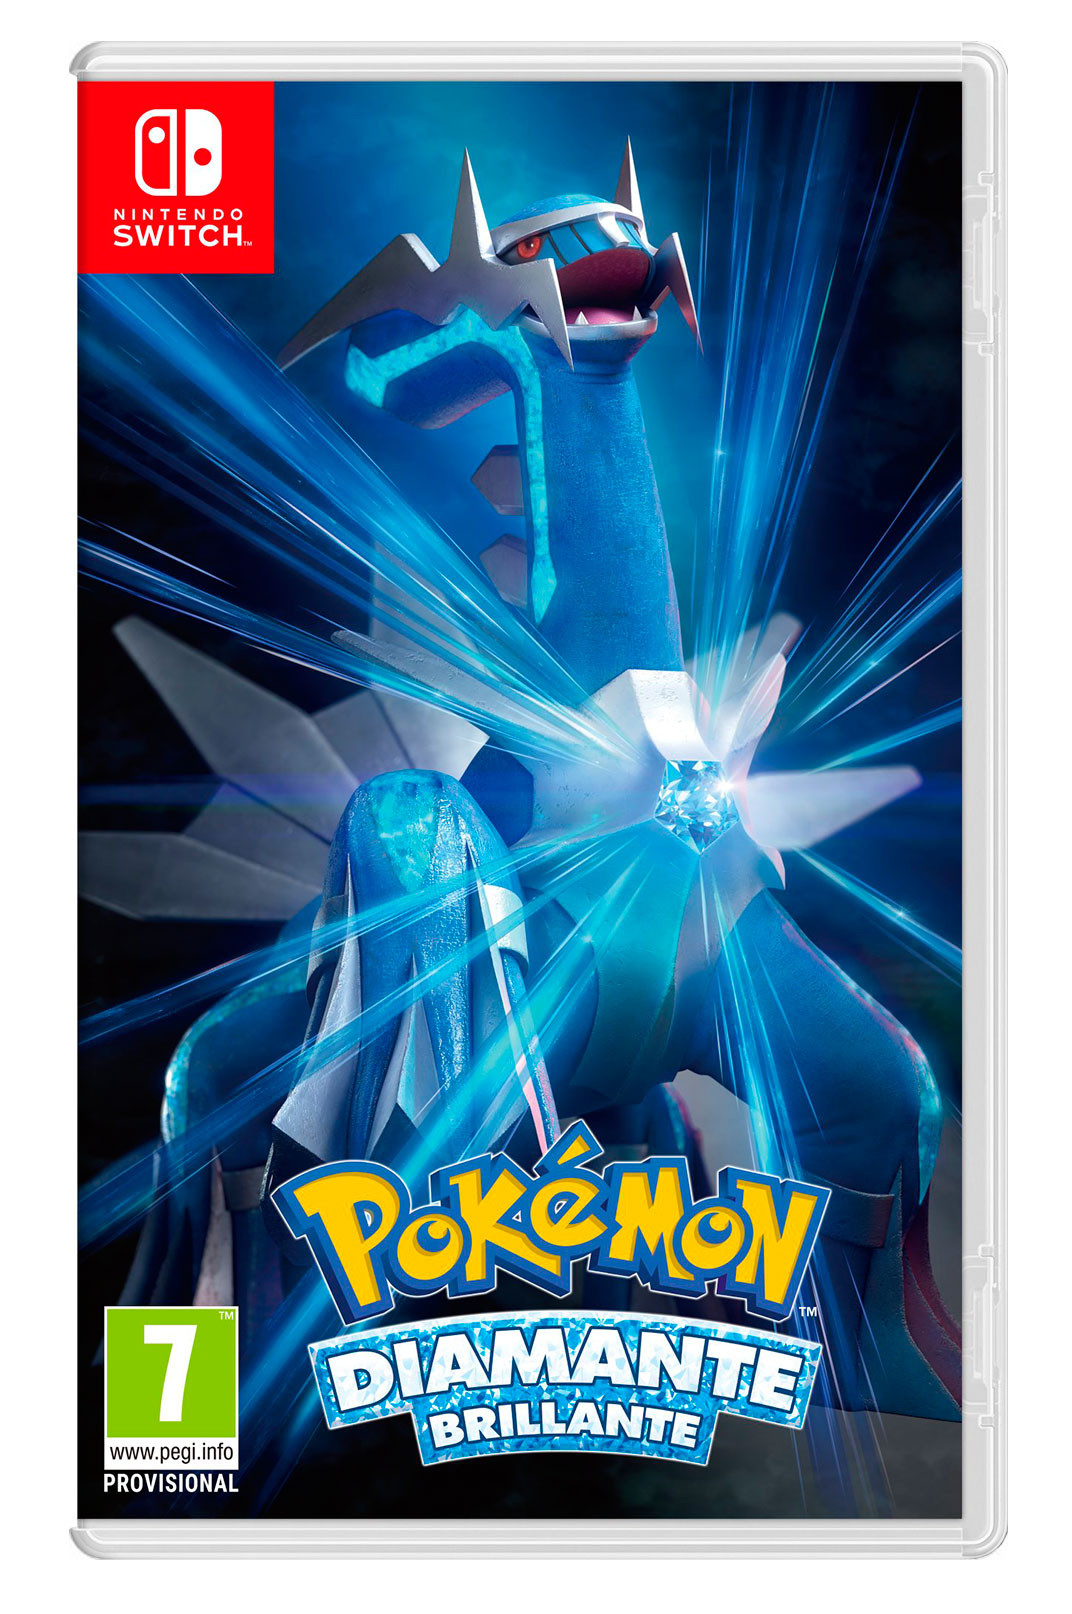 Pokémon Diamante Brillante/Perla Reluciente Pack Doble Nintendo Switch